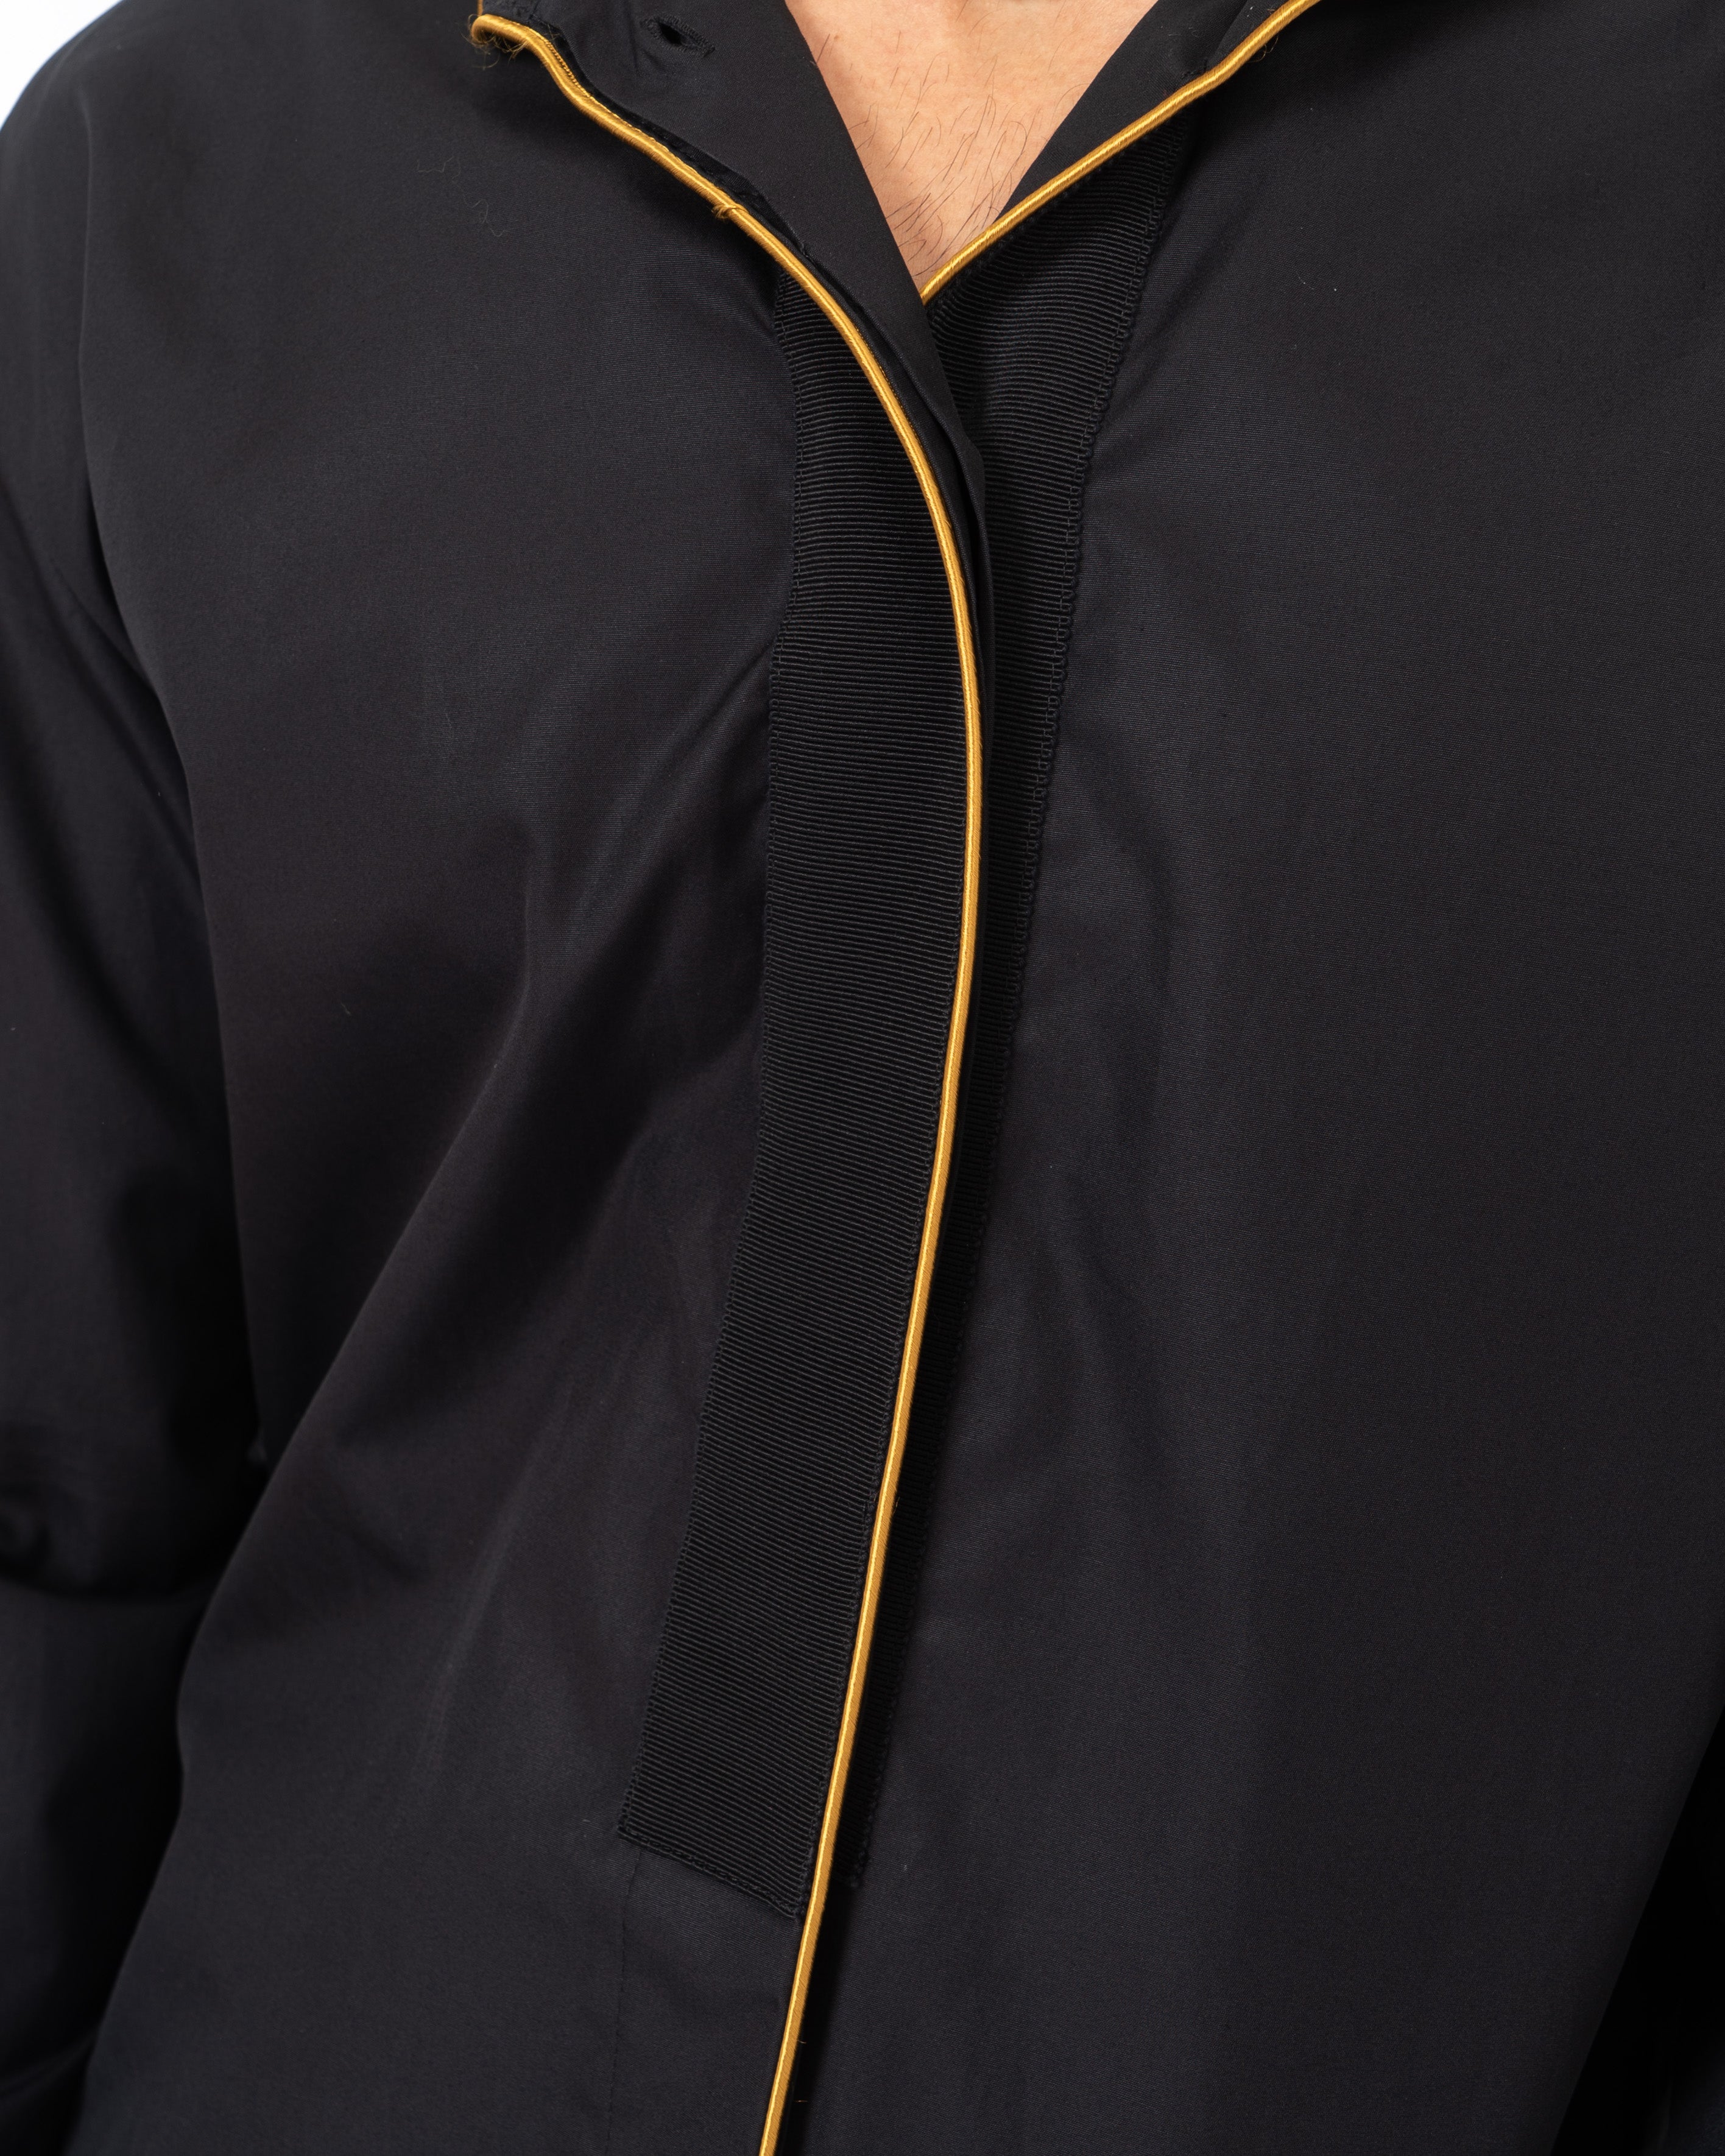 FW18 Byron Black Crossgrain Shirt Sample